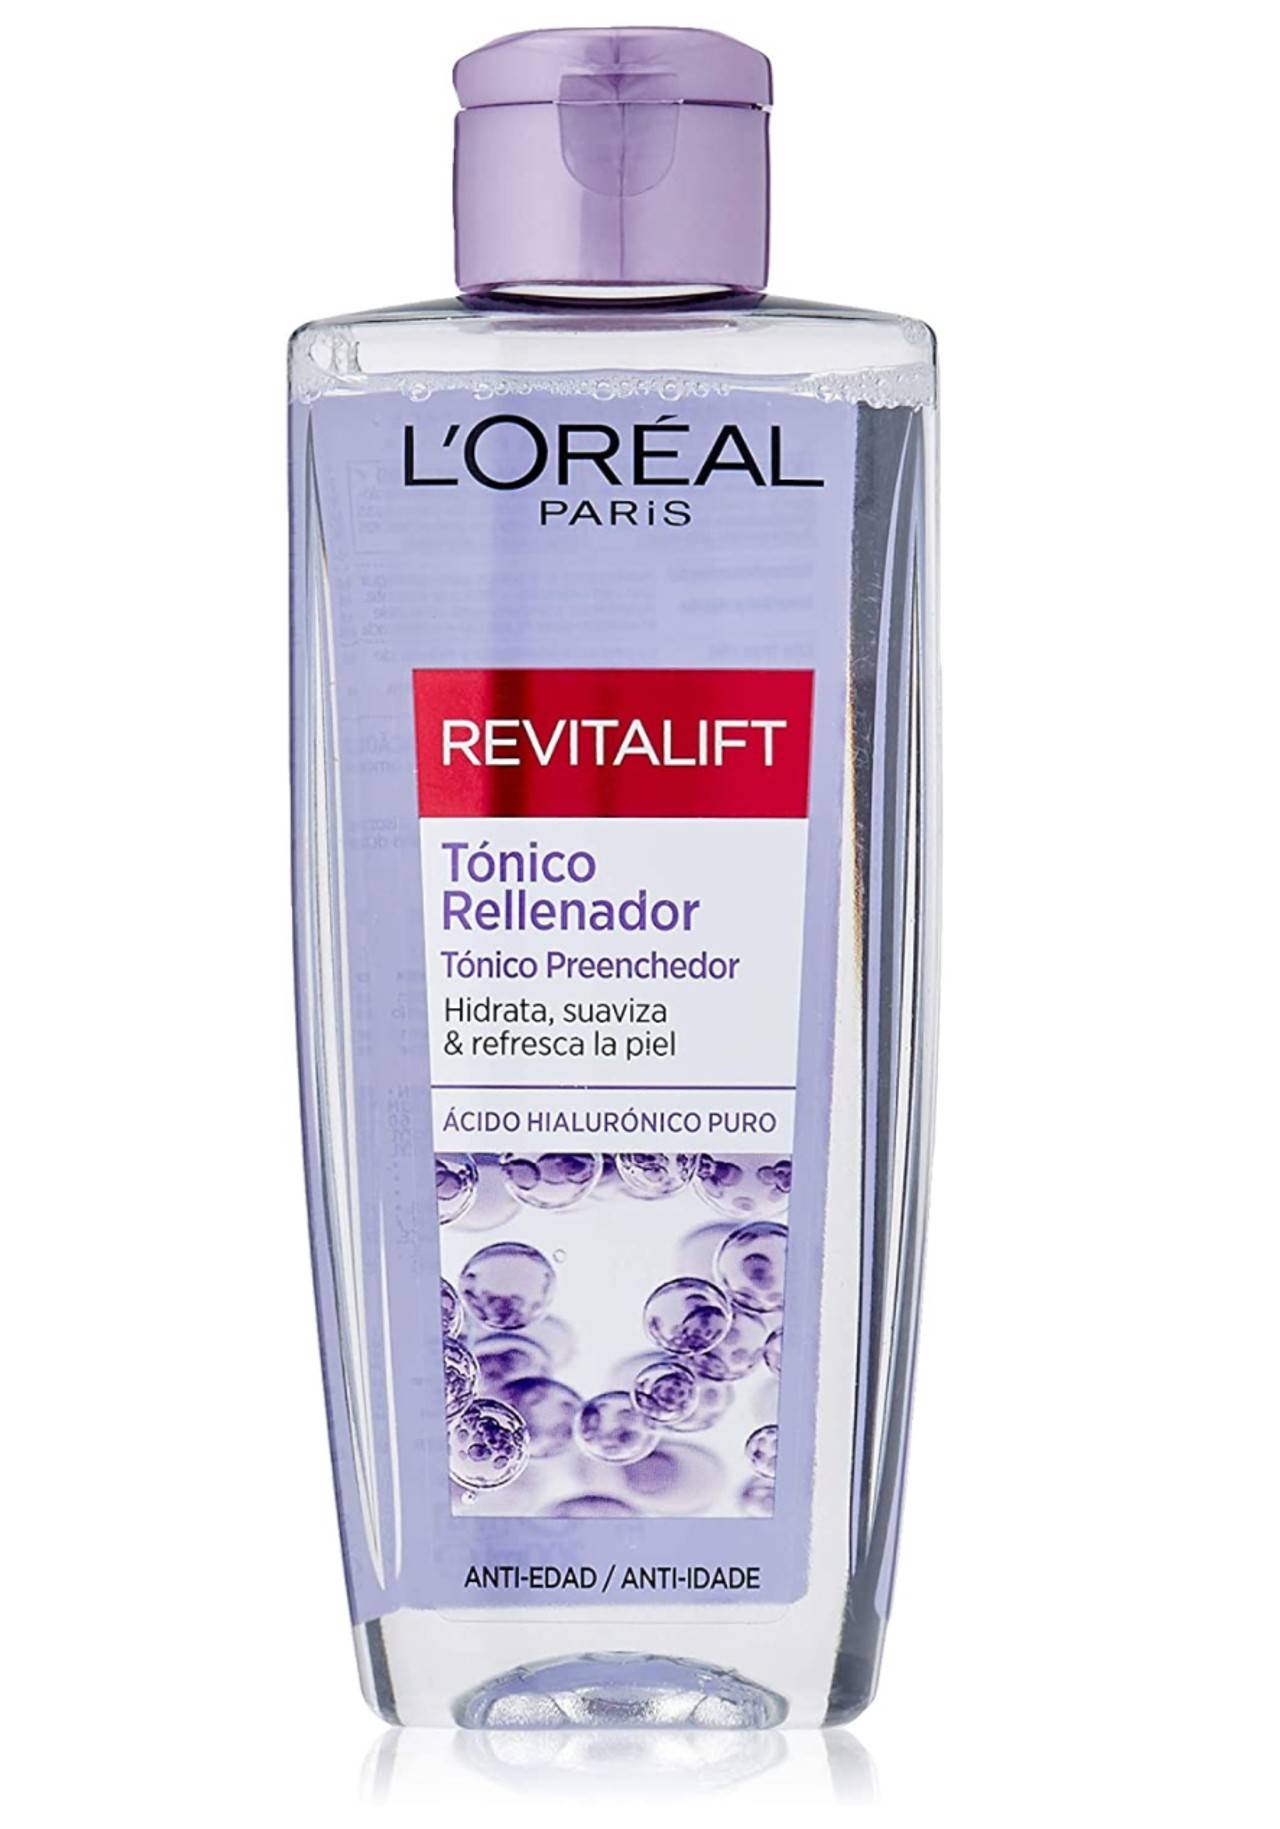 Tónico rellenador de L'Oréal